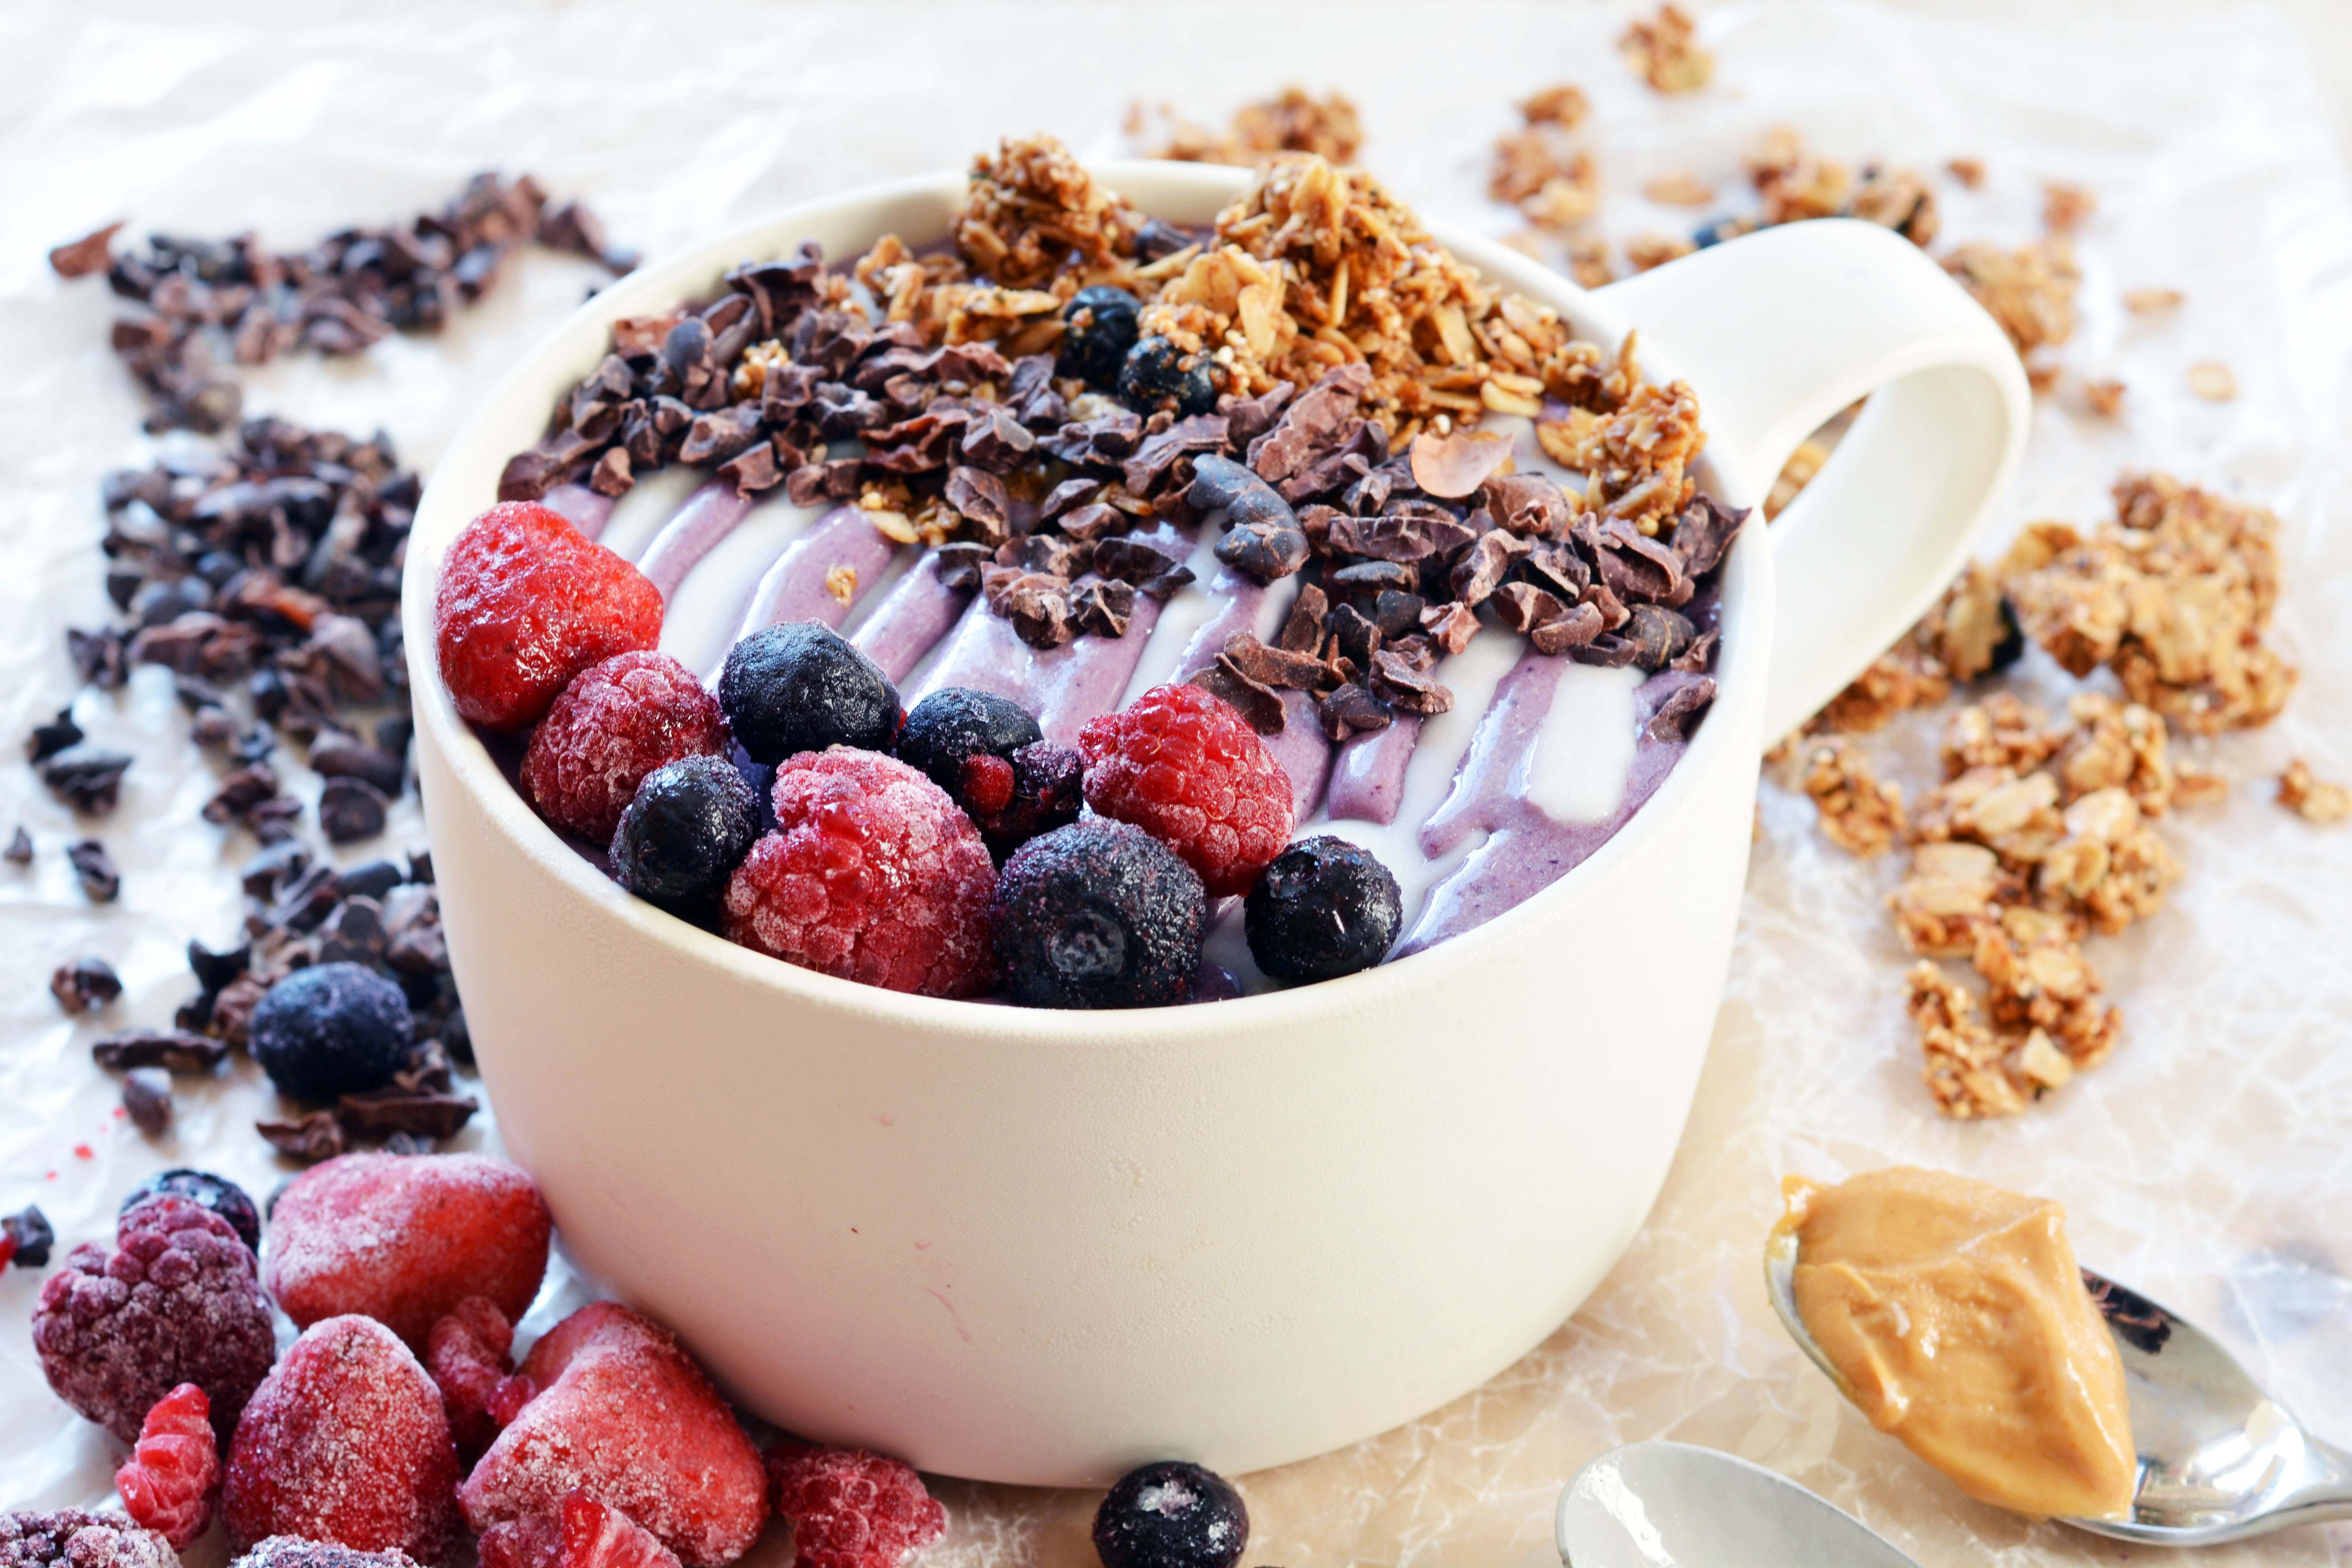 https://thecolorfulkitchen.com/wp-content/uploads/2016/07/Easy-Berry-Breakfast-Smoothie-Bowl-Vegan-Gluten-Free-3.jpg